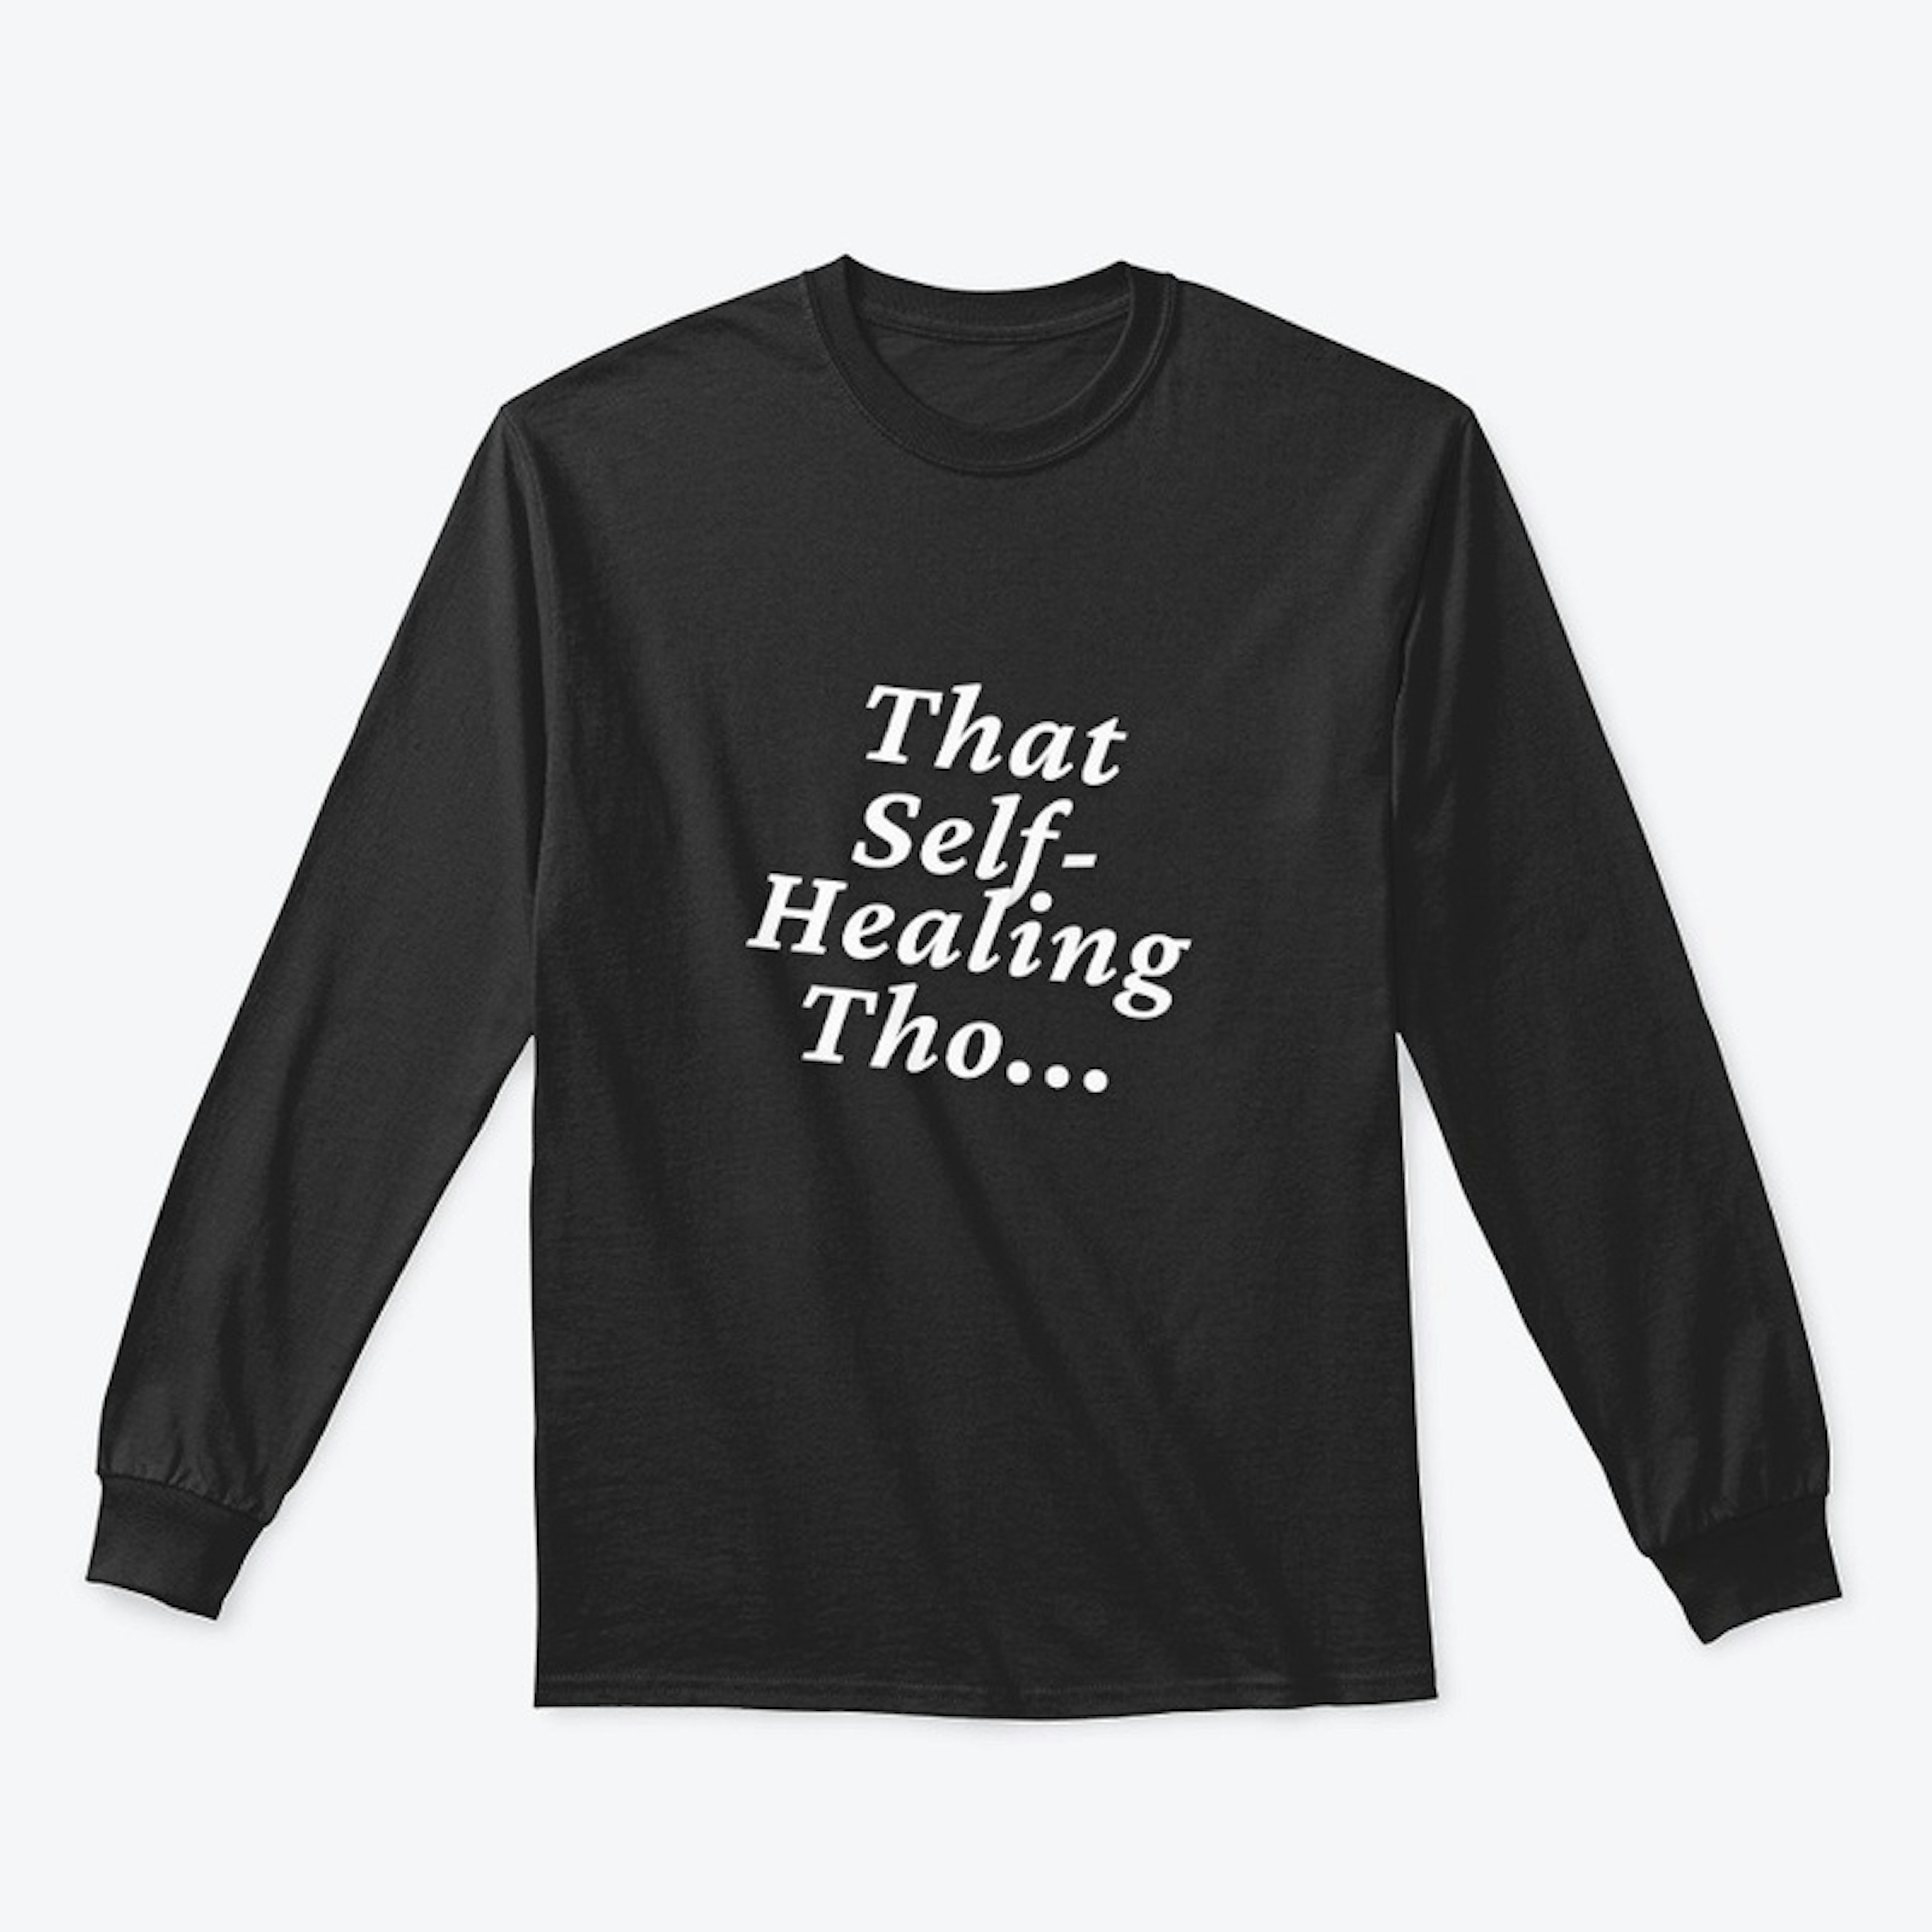 Healing, but make it fashion